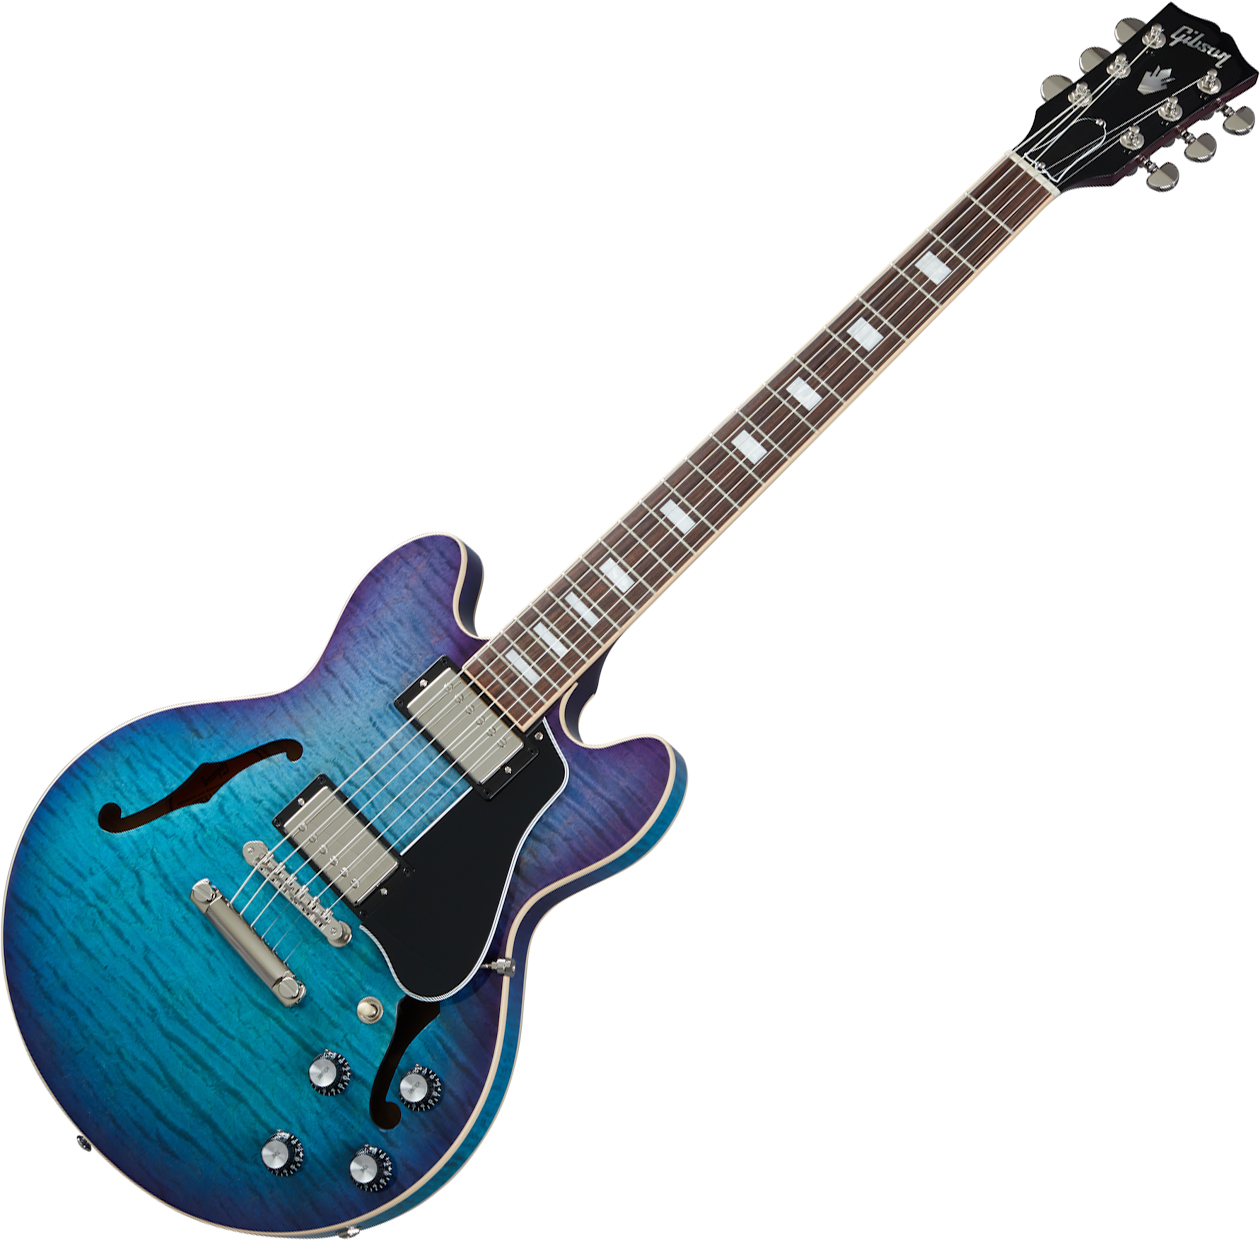 Gibson ES-339 Figured - blueberry burst Semi-hollow electric guitar blue